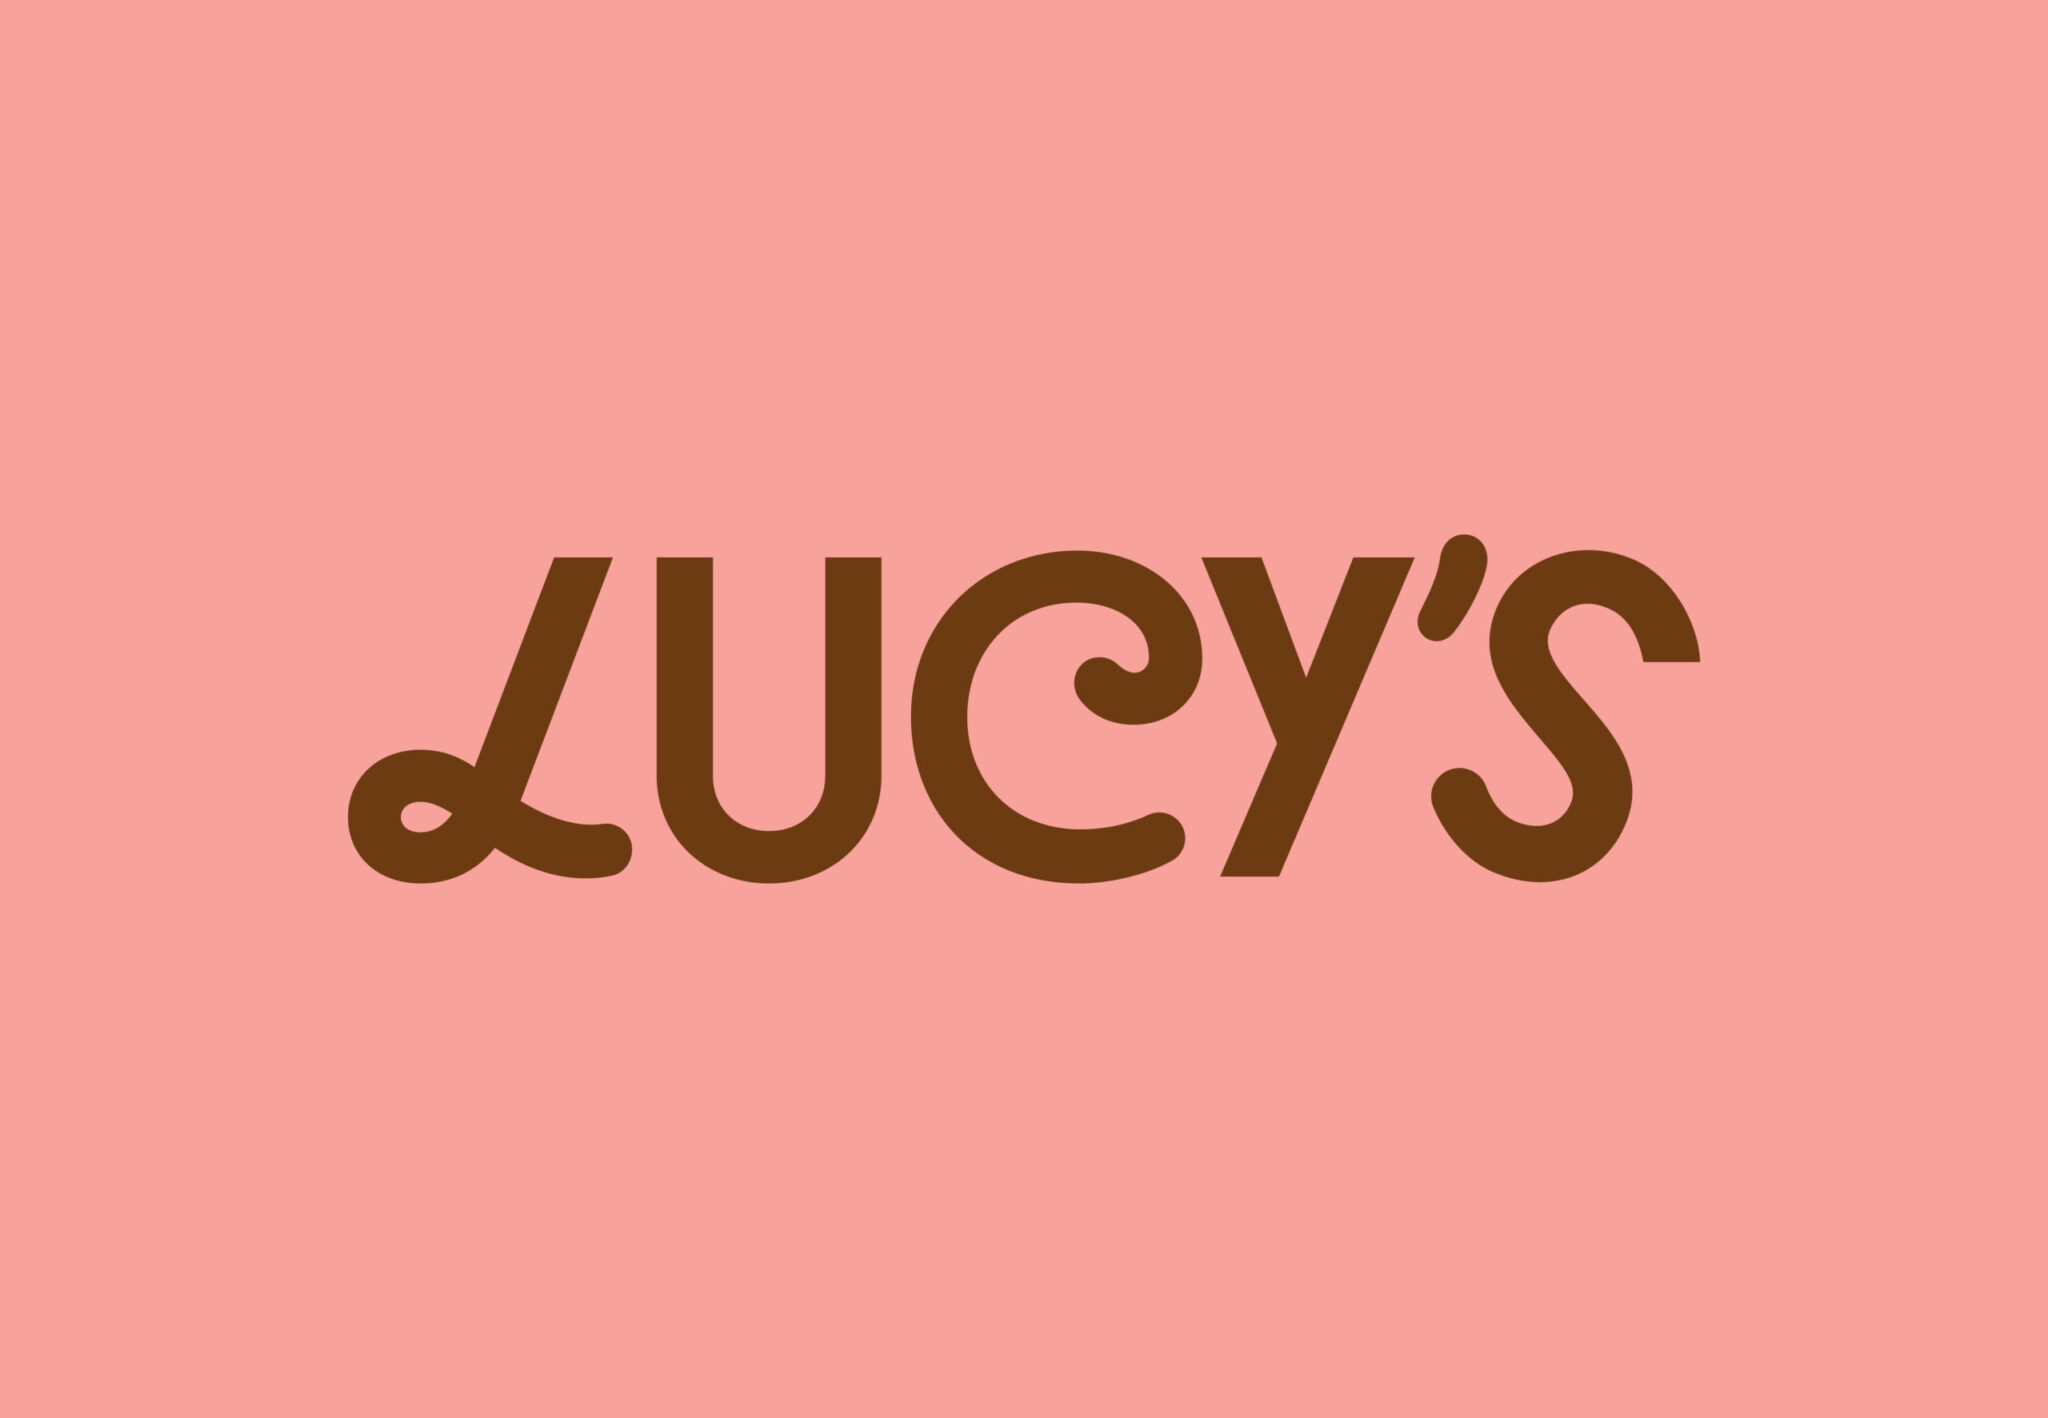 Lucy’s Gluten Free - Area Design